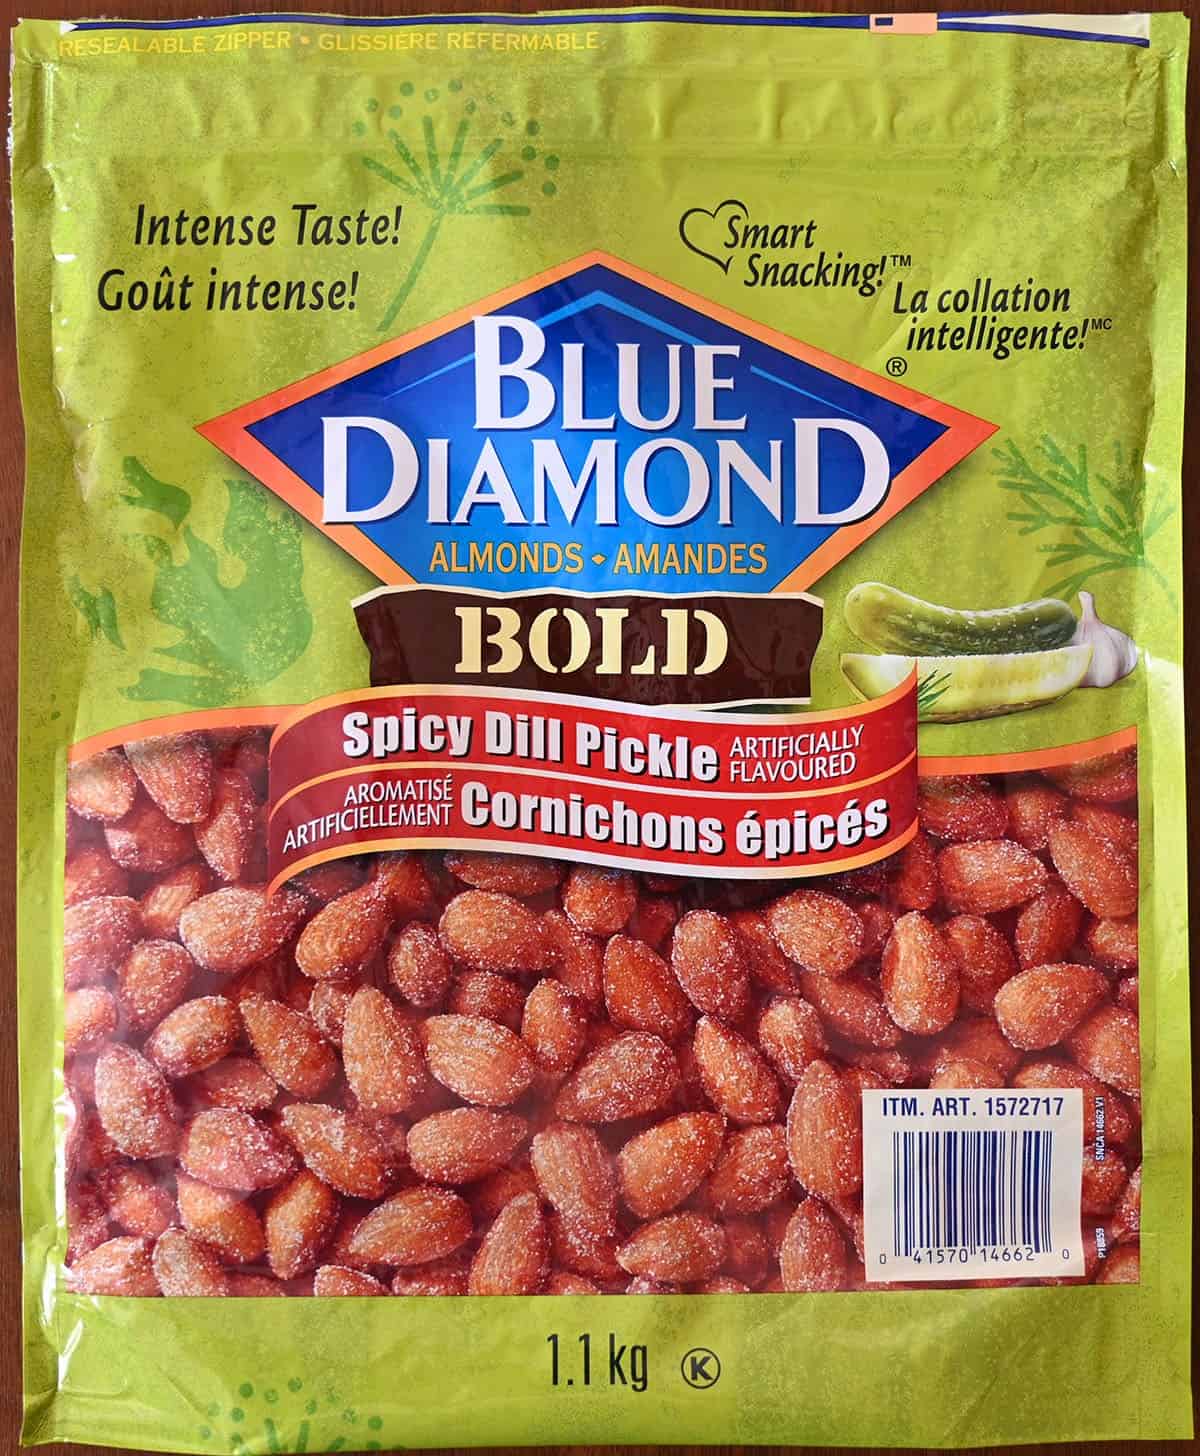 Costco Blue Diamond Spicy Dill Pickle Almonds Review Costcuisine